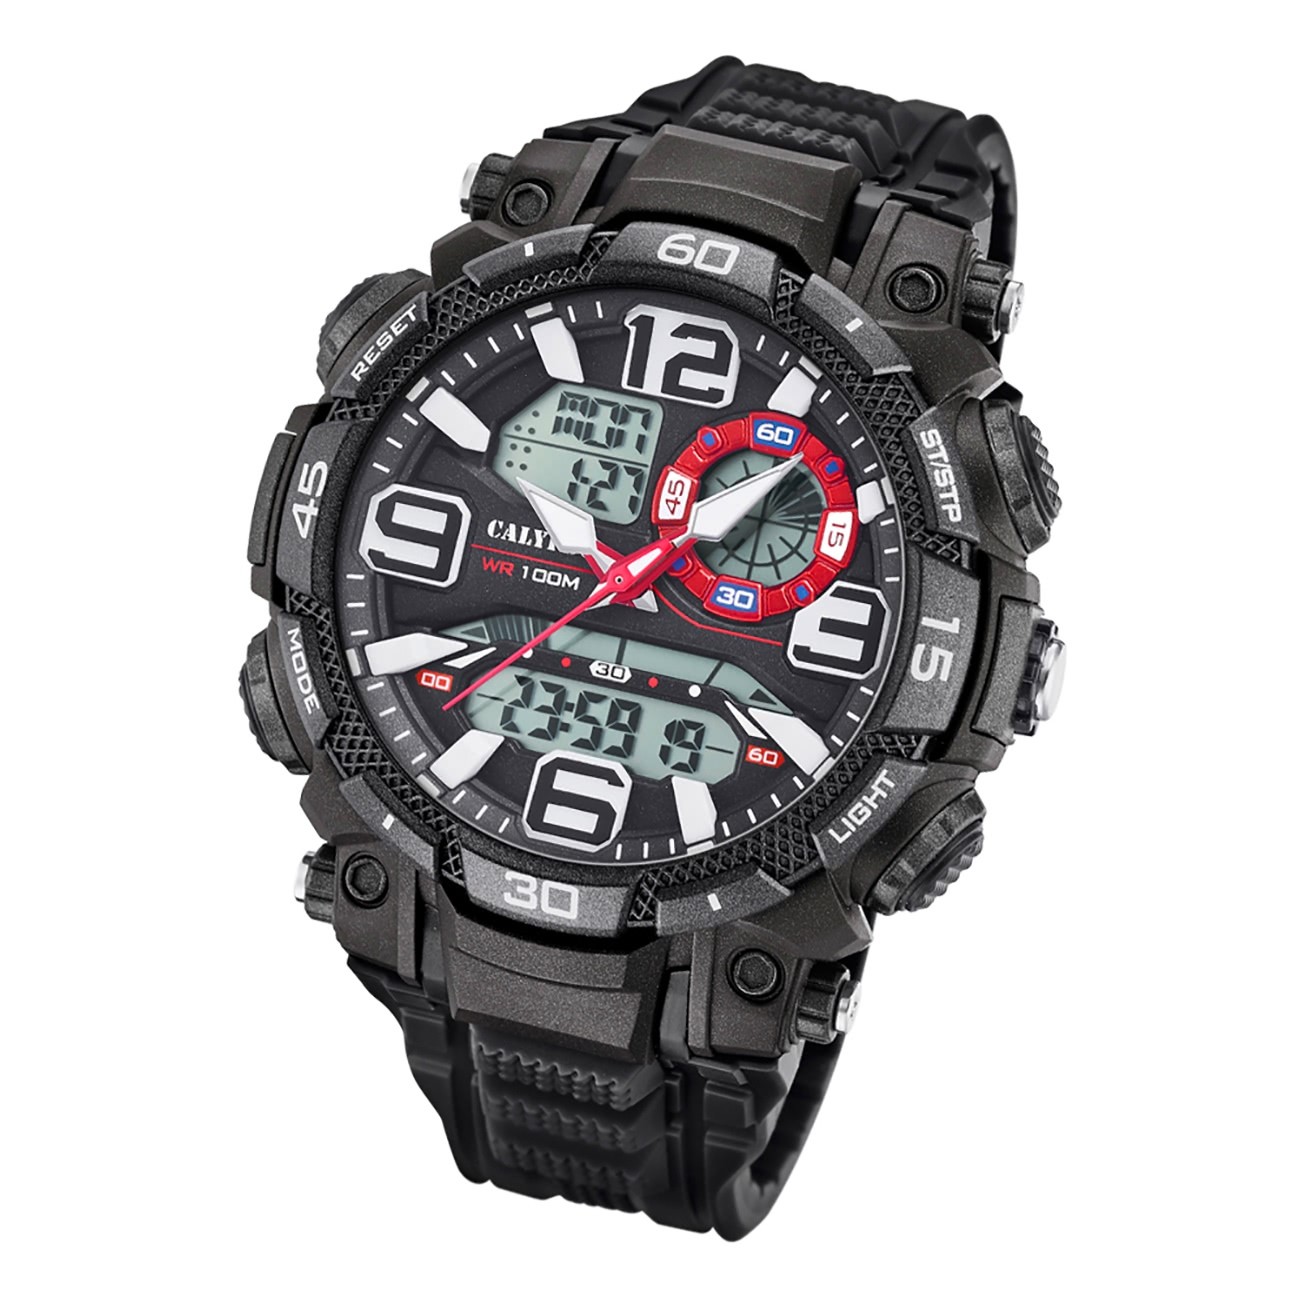 Calypso Herren Armbanduhr K5793/1 Analog-Digital Kunststoff schwarz UK5793/1